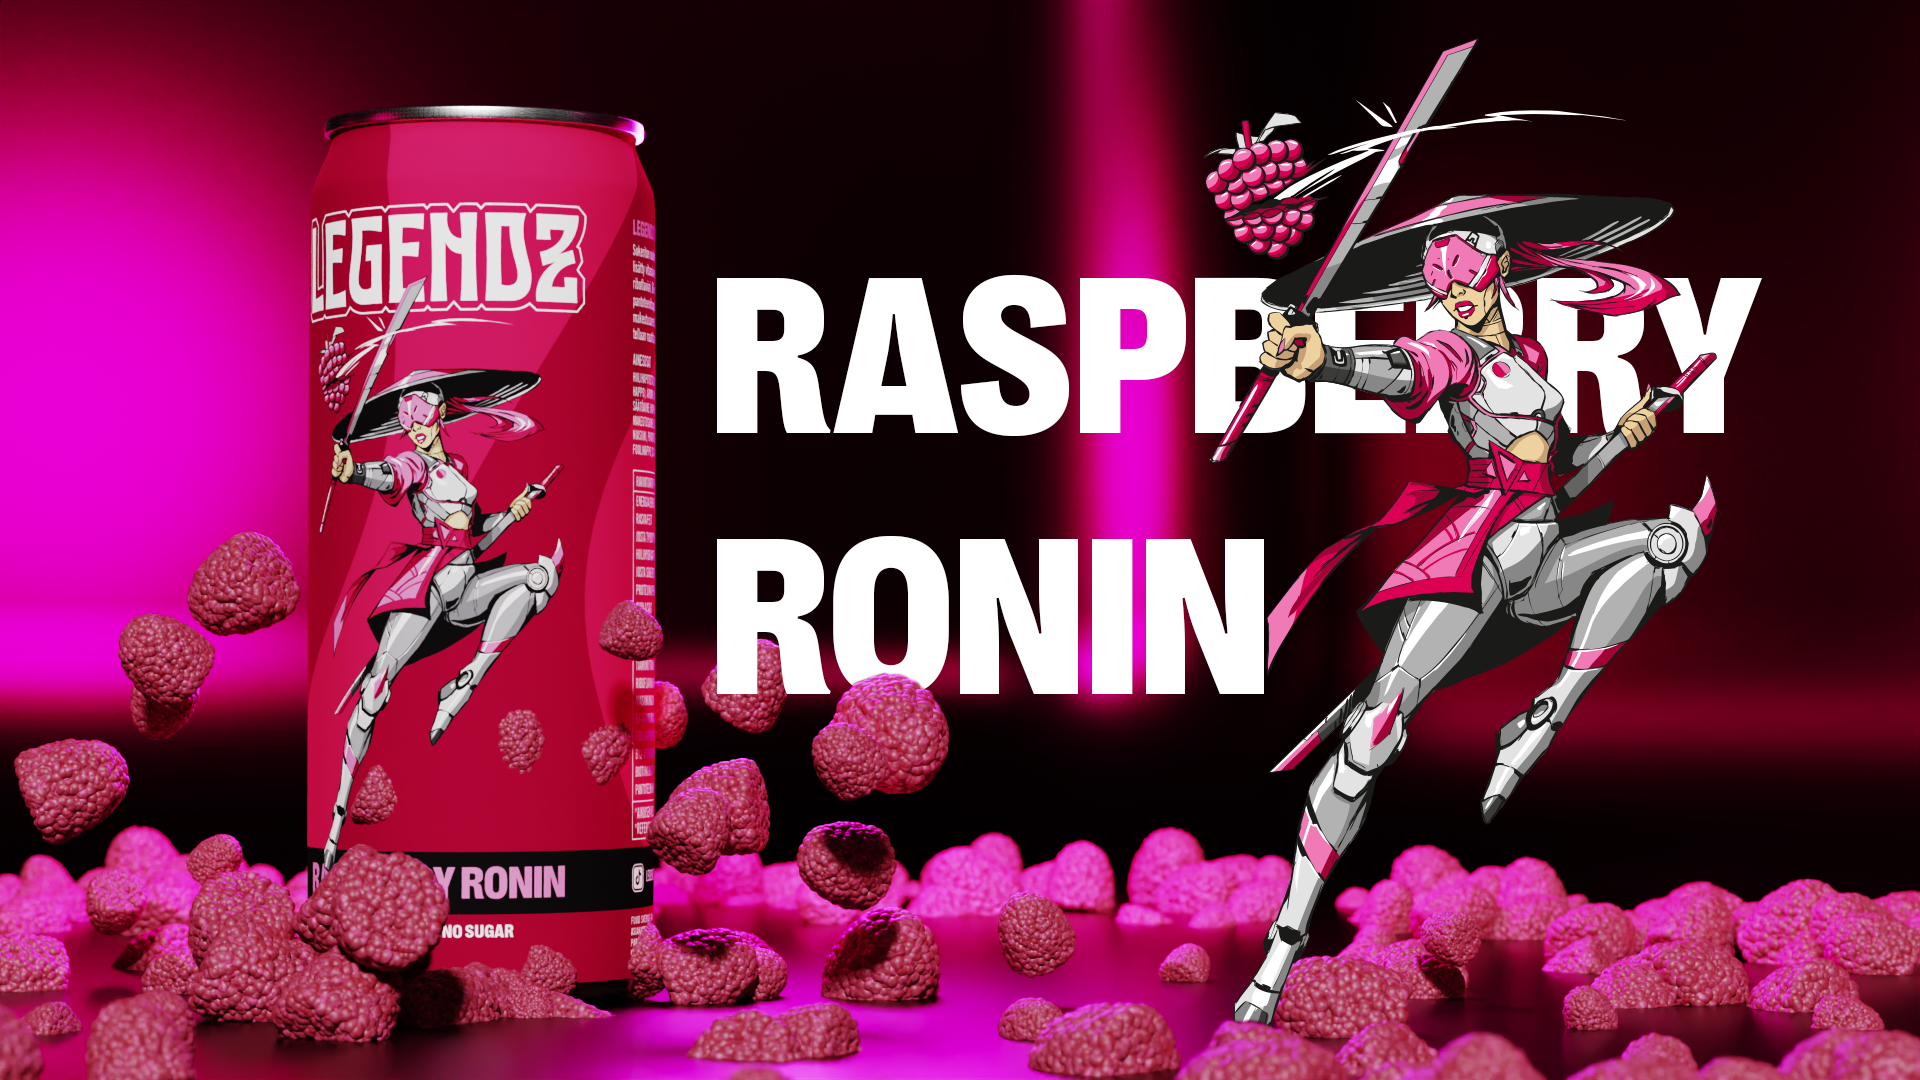 Raspberry ronin